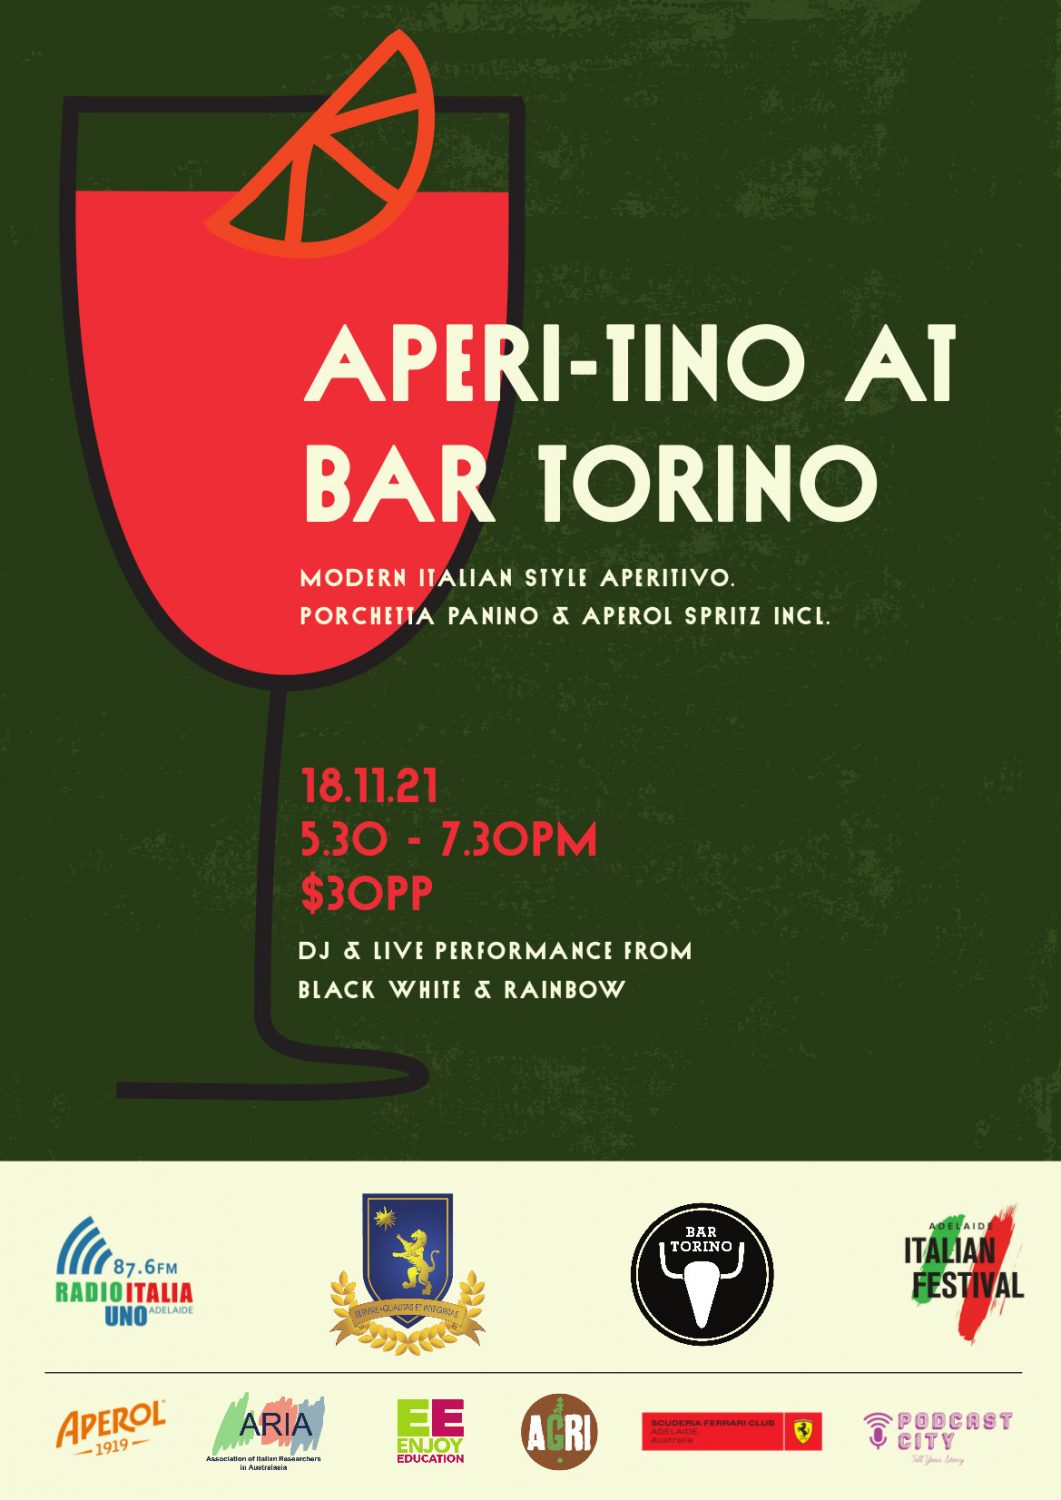 Bar torino poster